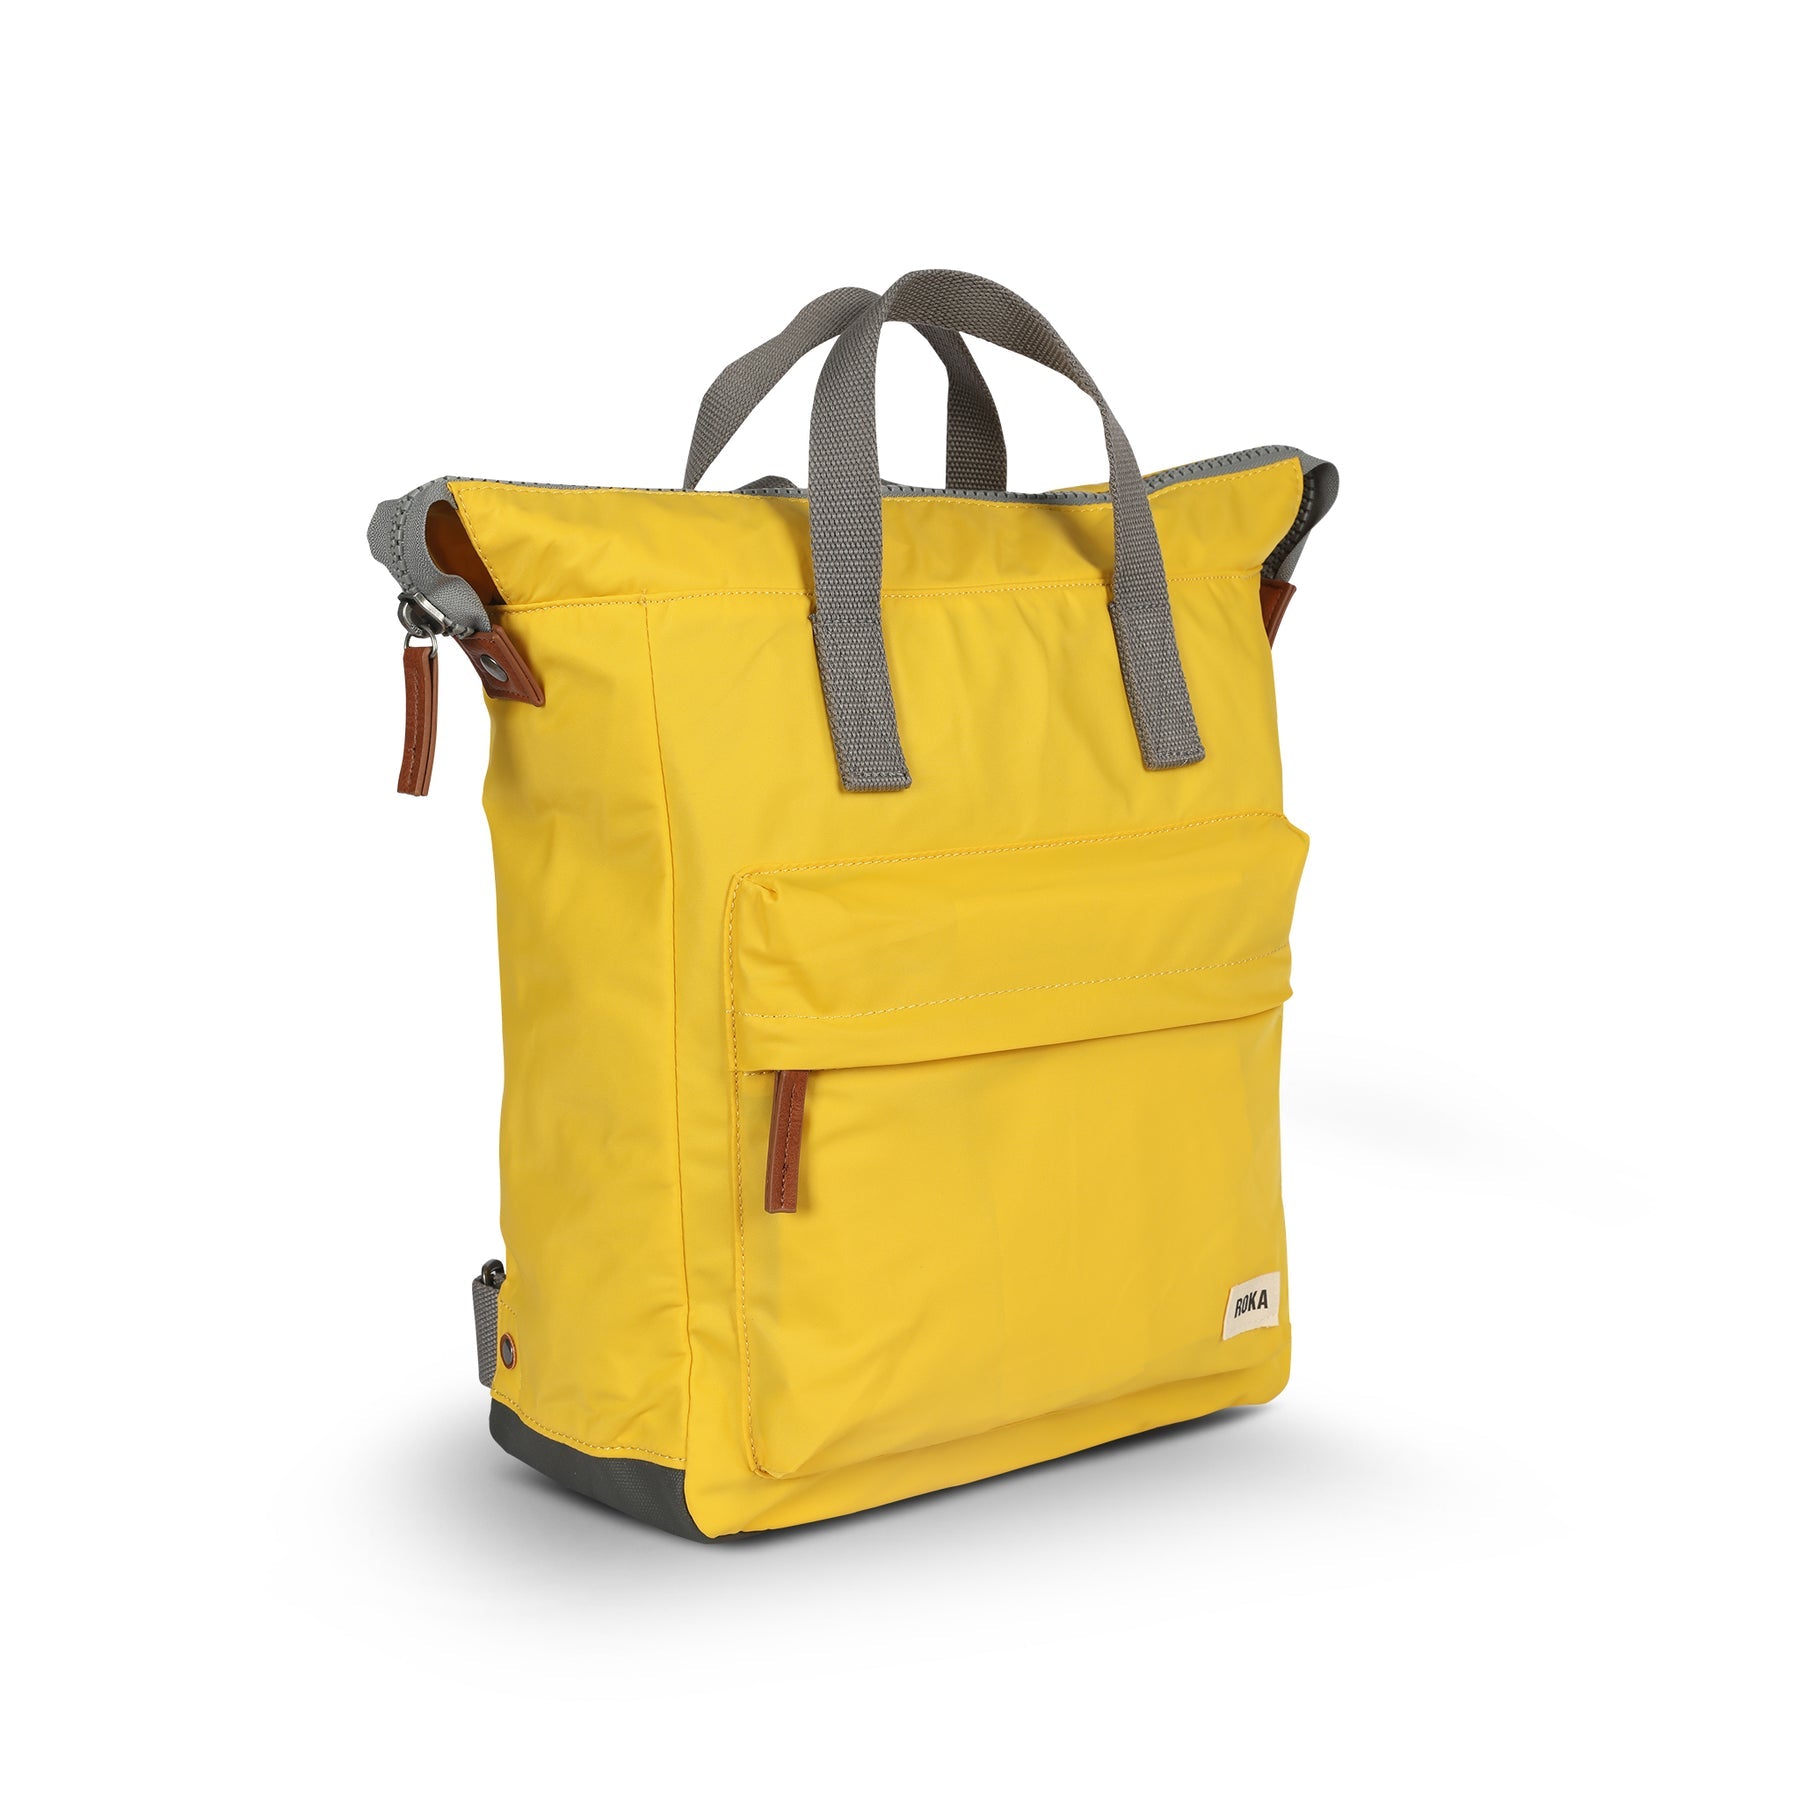 ROKA Bantry B Aspen Yellow Medium Recycled Nylon Bag - OS